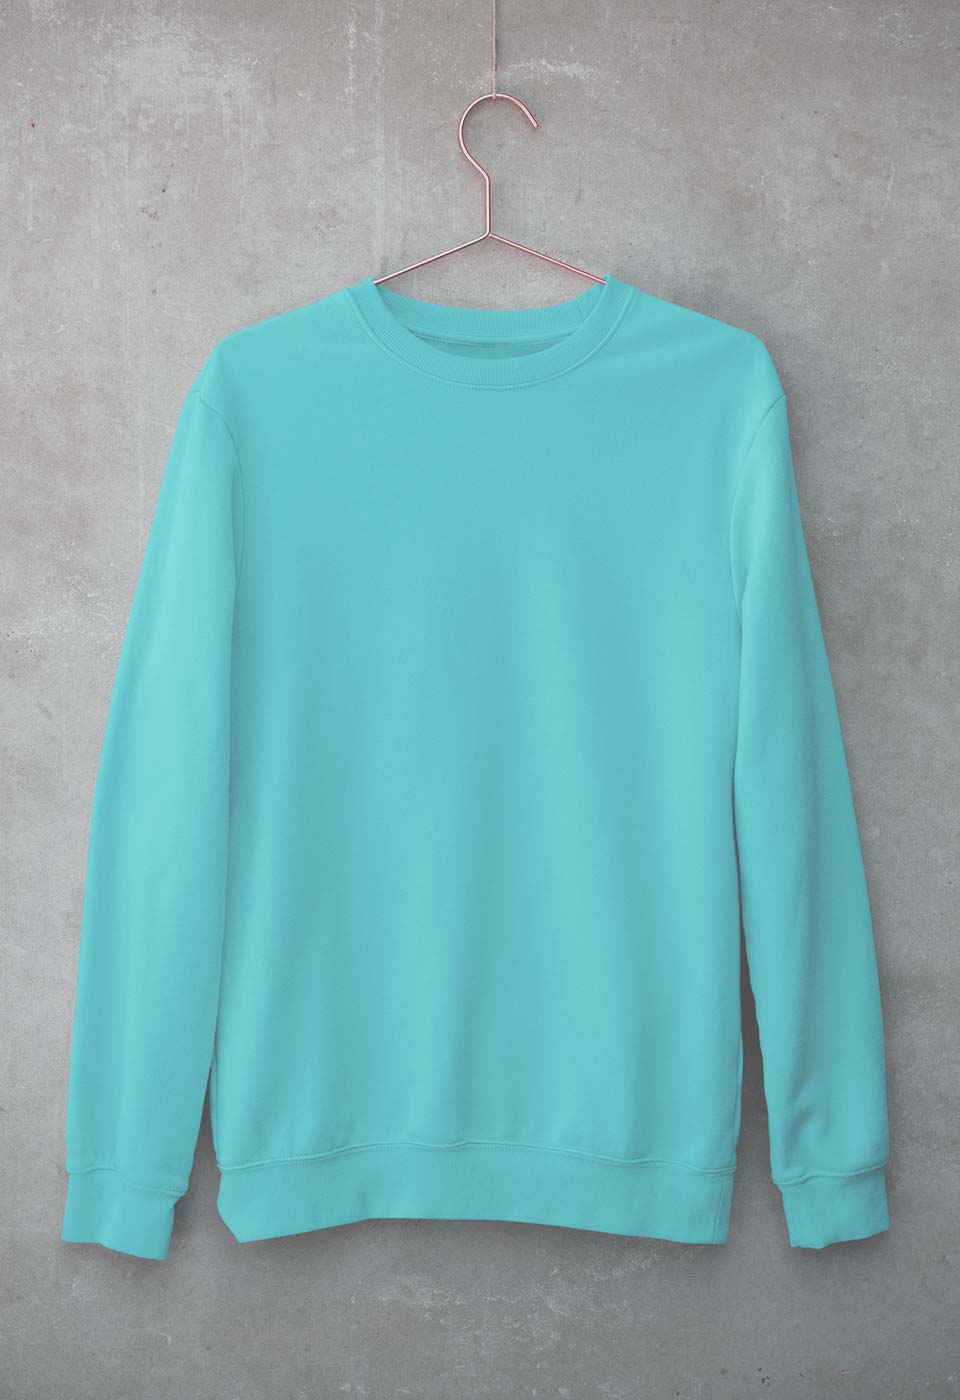 Plain Mint Unisex Sweatshirt for Men/Women